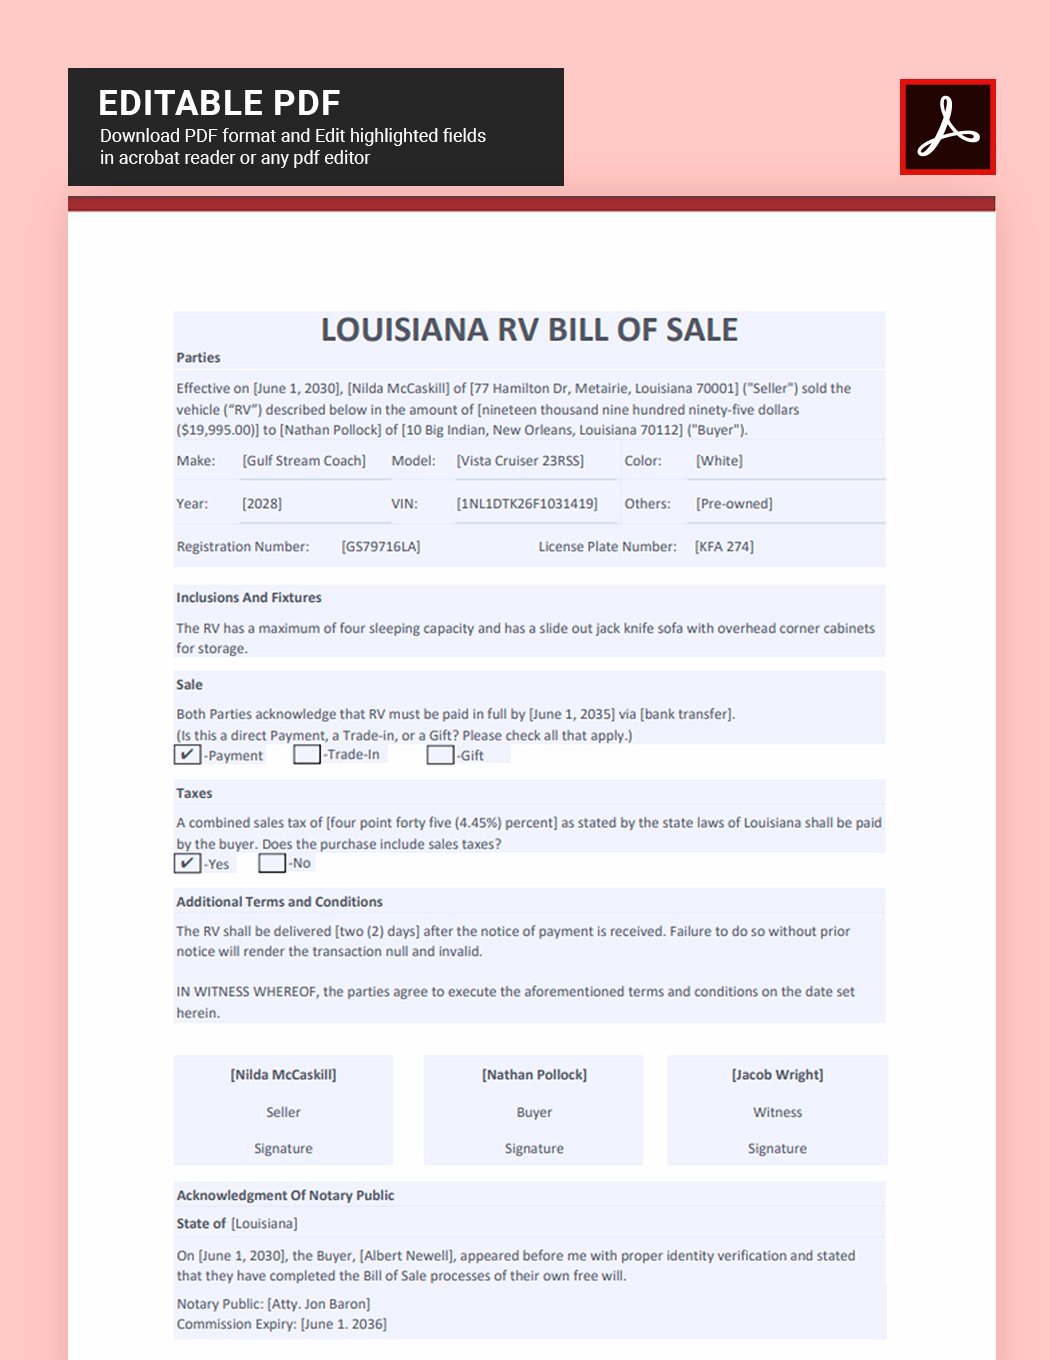 Louisiana RV Bill of Sale Form Template